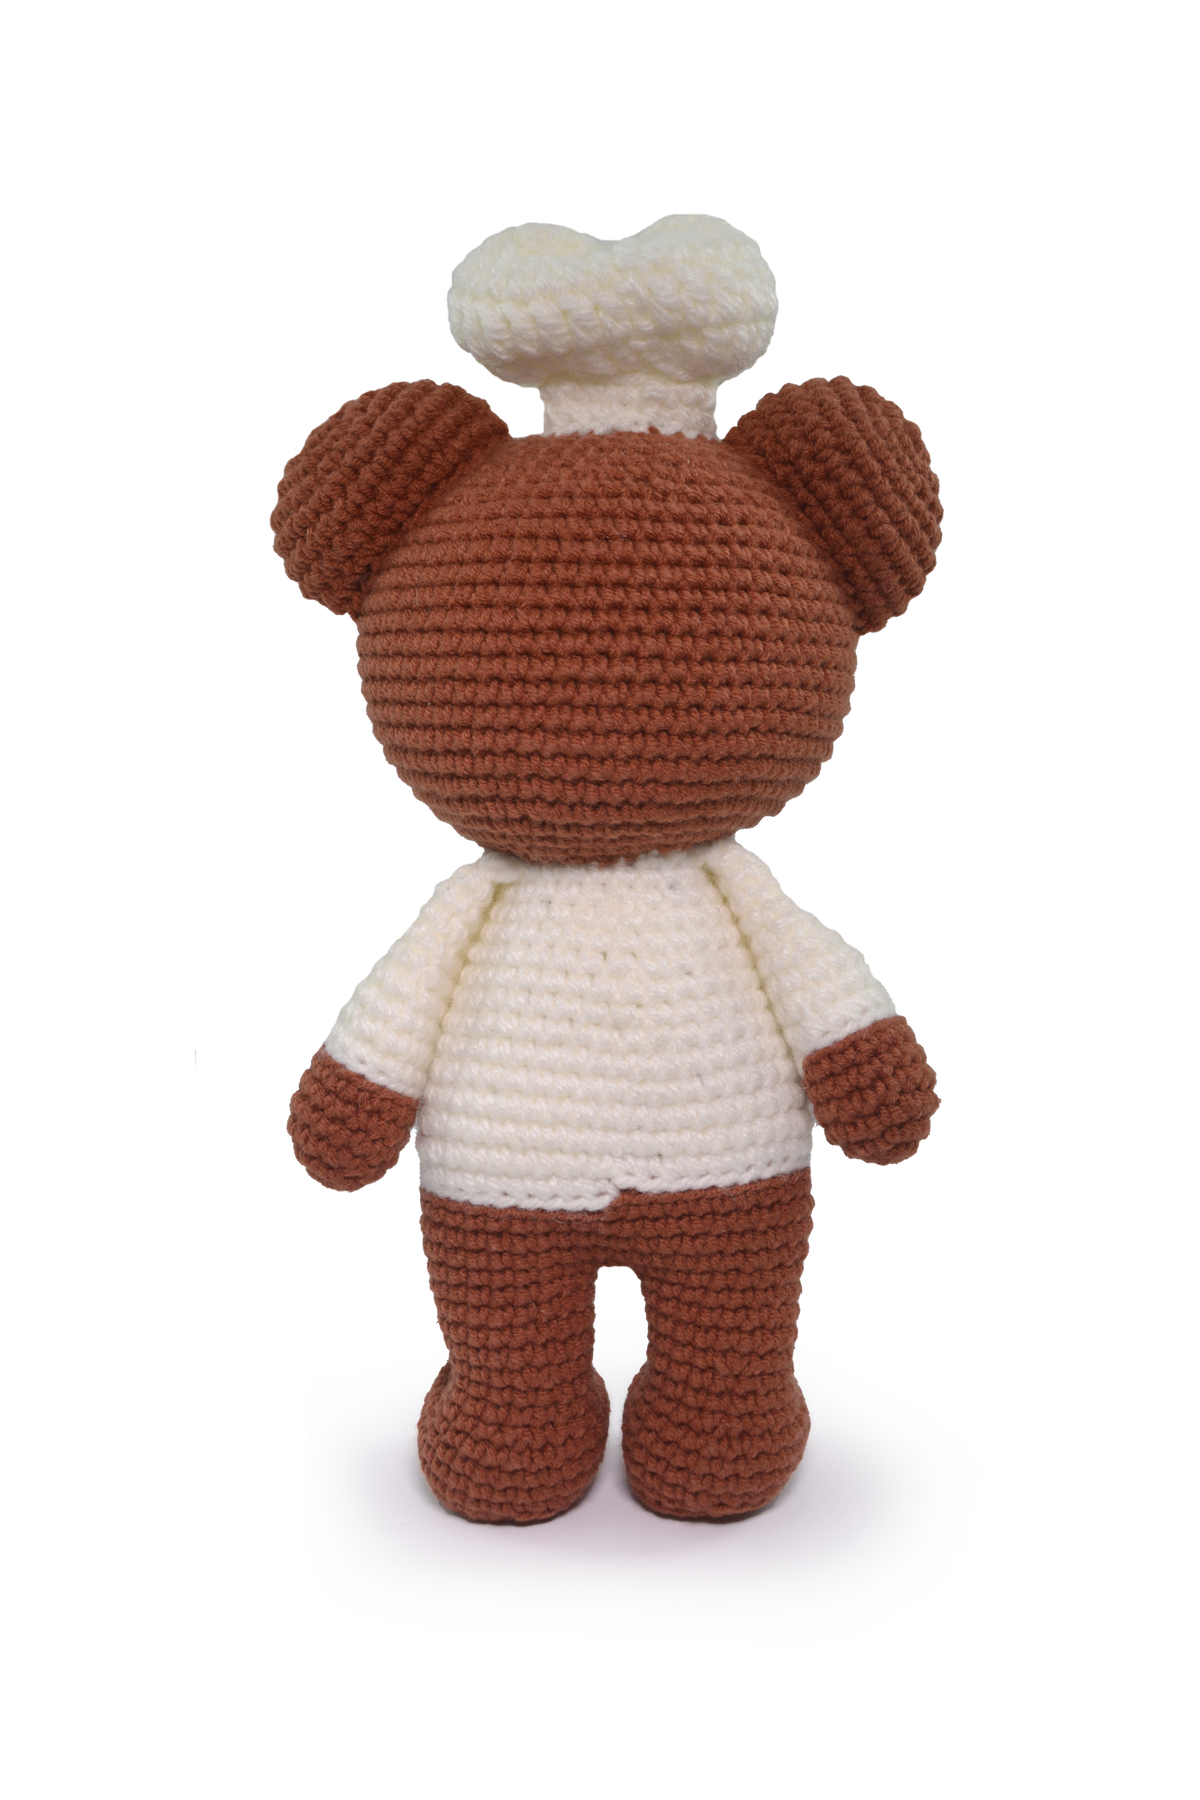 Circulo Amigurumi Cuddly Teddy Bear Kits